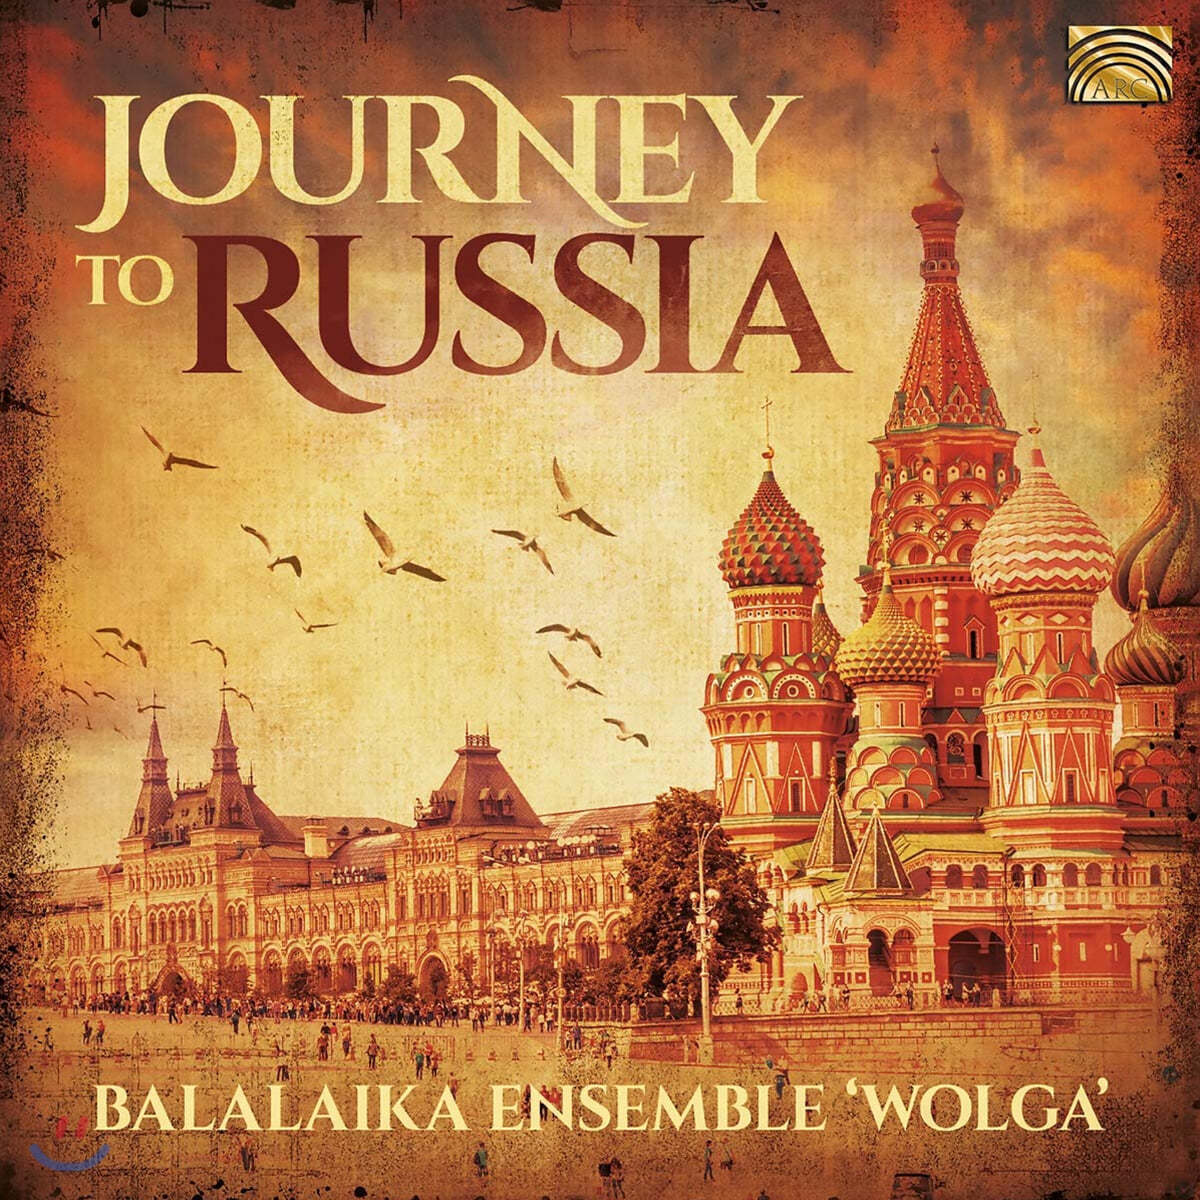 Balalaika Ensemble Wolga (발랄라이카 앙상블 볼가) - 음악과 함께 떠나는 러시아 여행 Journey To Russia